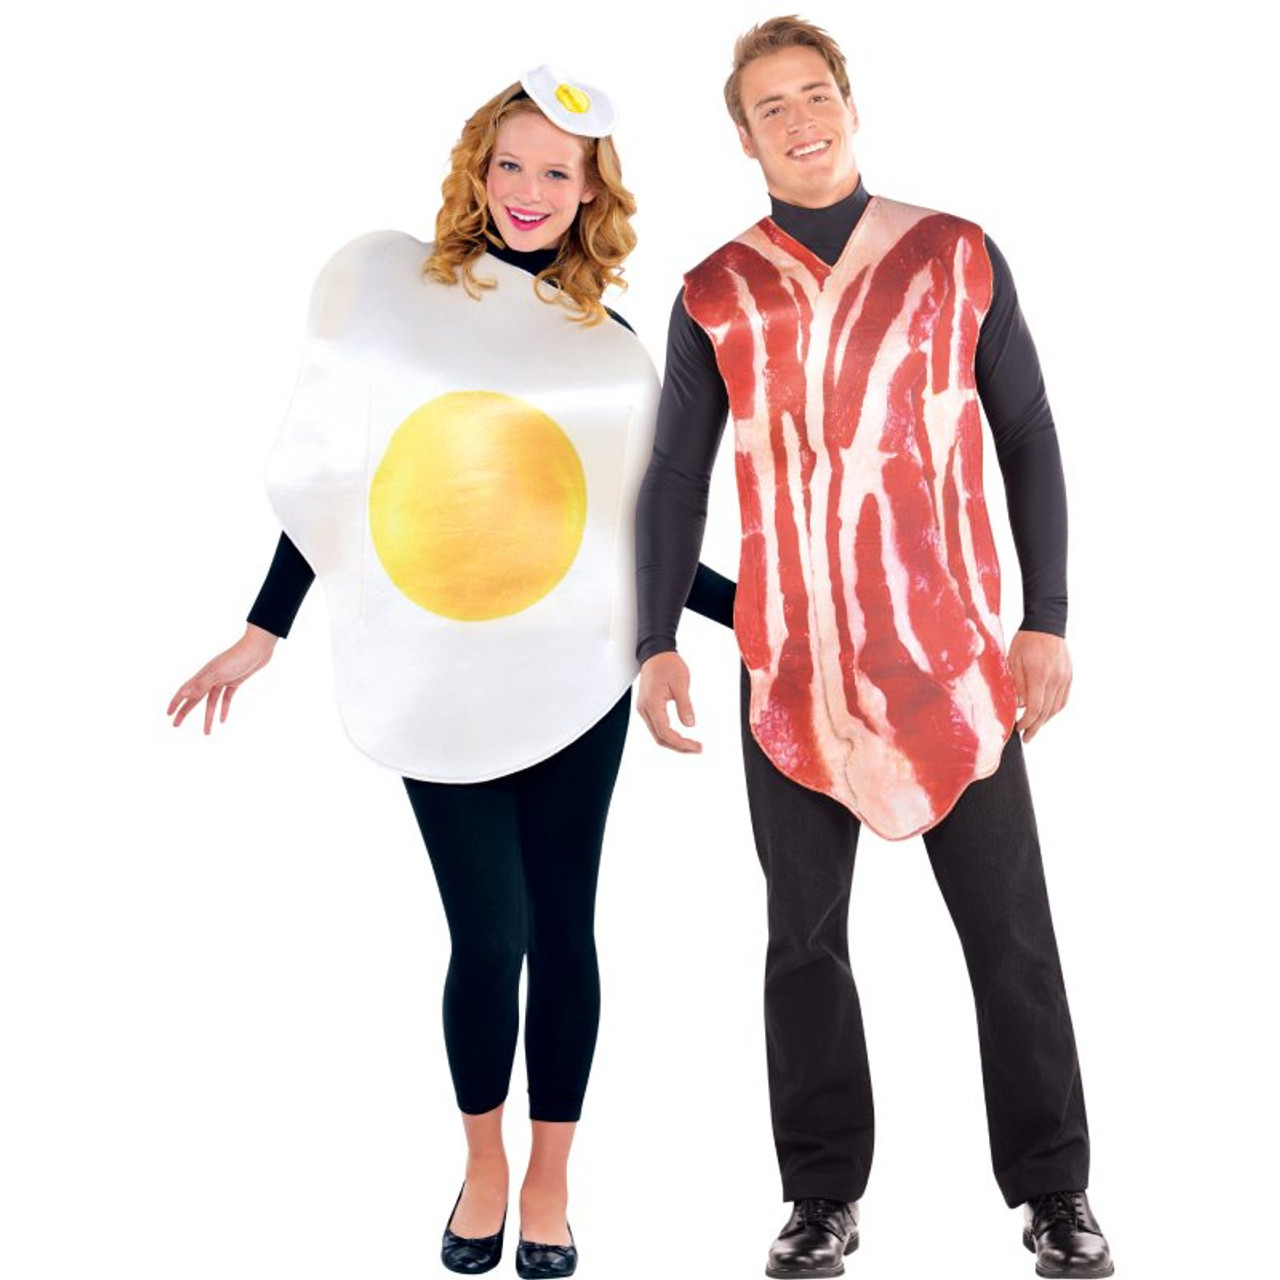 Breakfast Buddies - 2pc Couple Costume